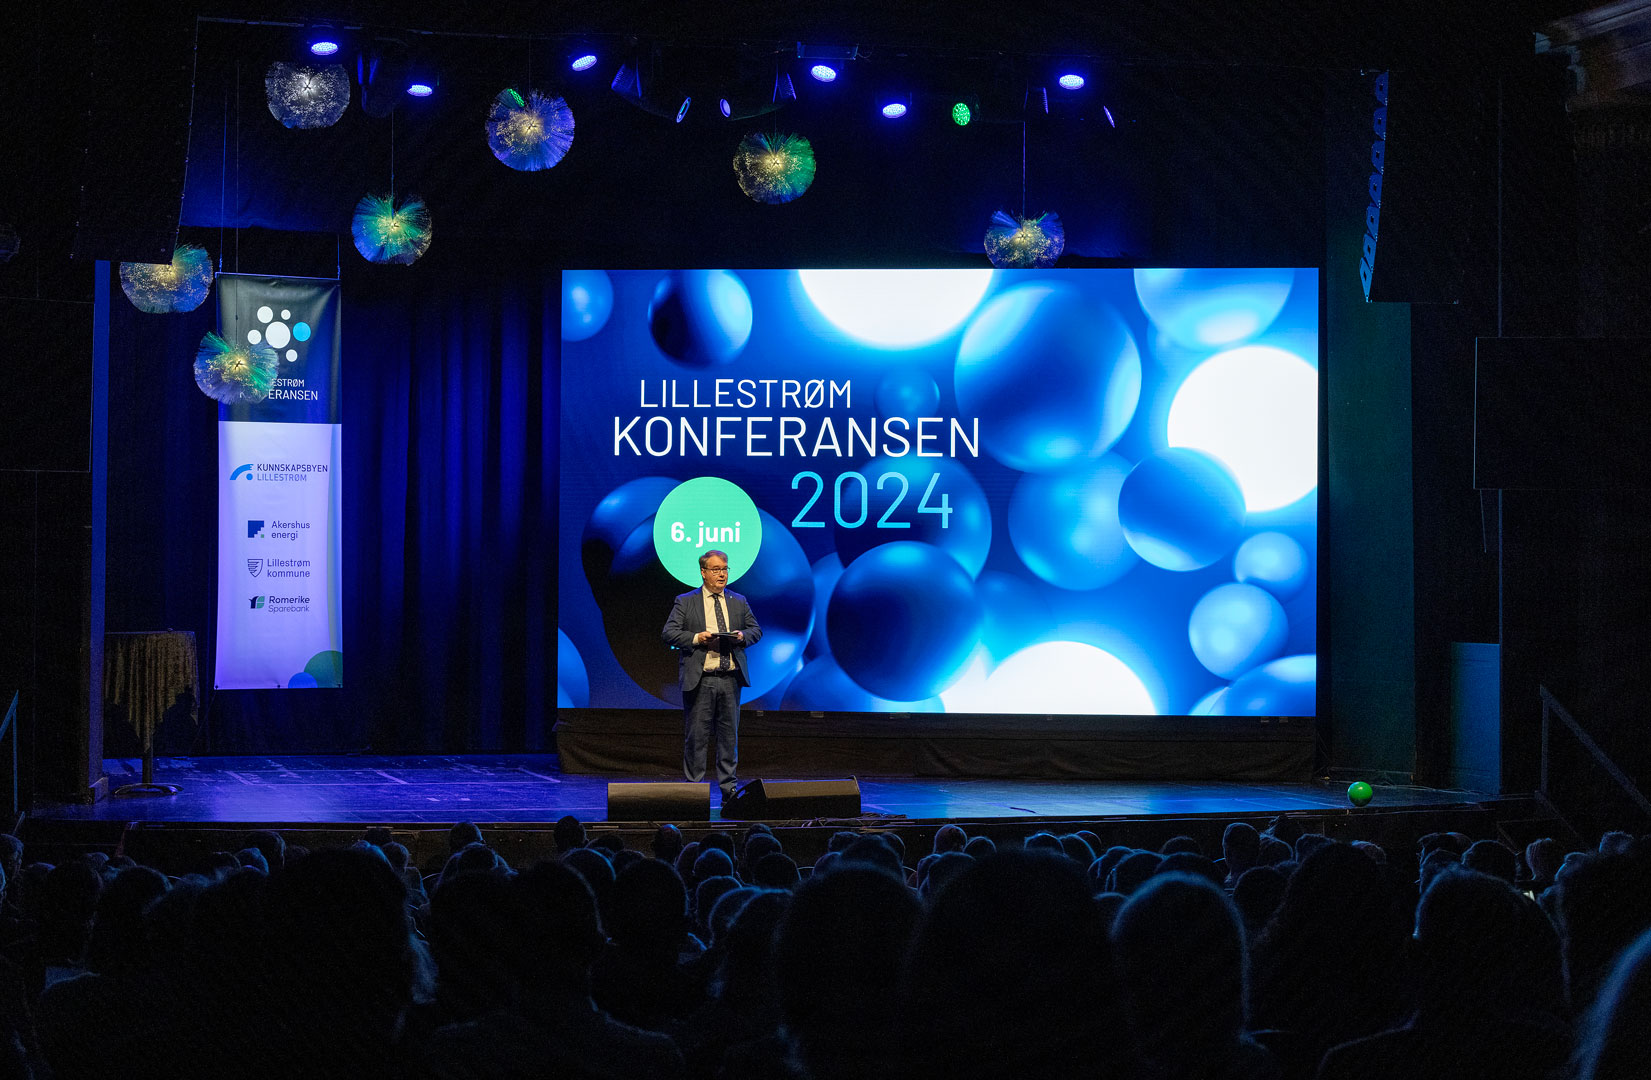 Ordfører Kjartan Berland ønsker velkommen til Lillestrømkonferansen 2024